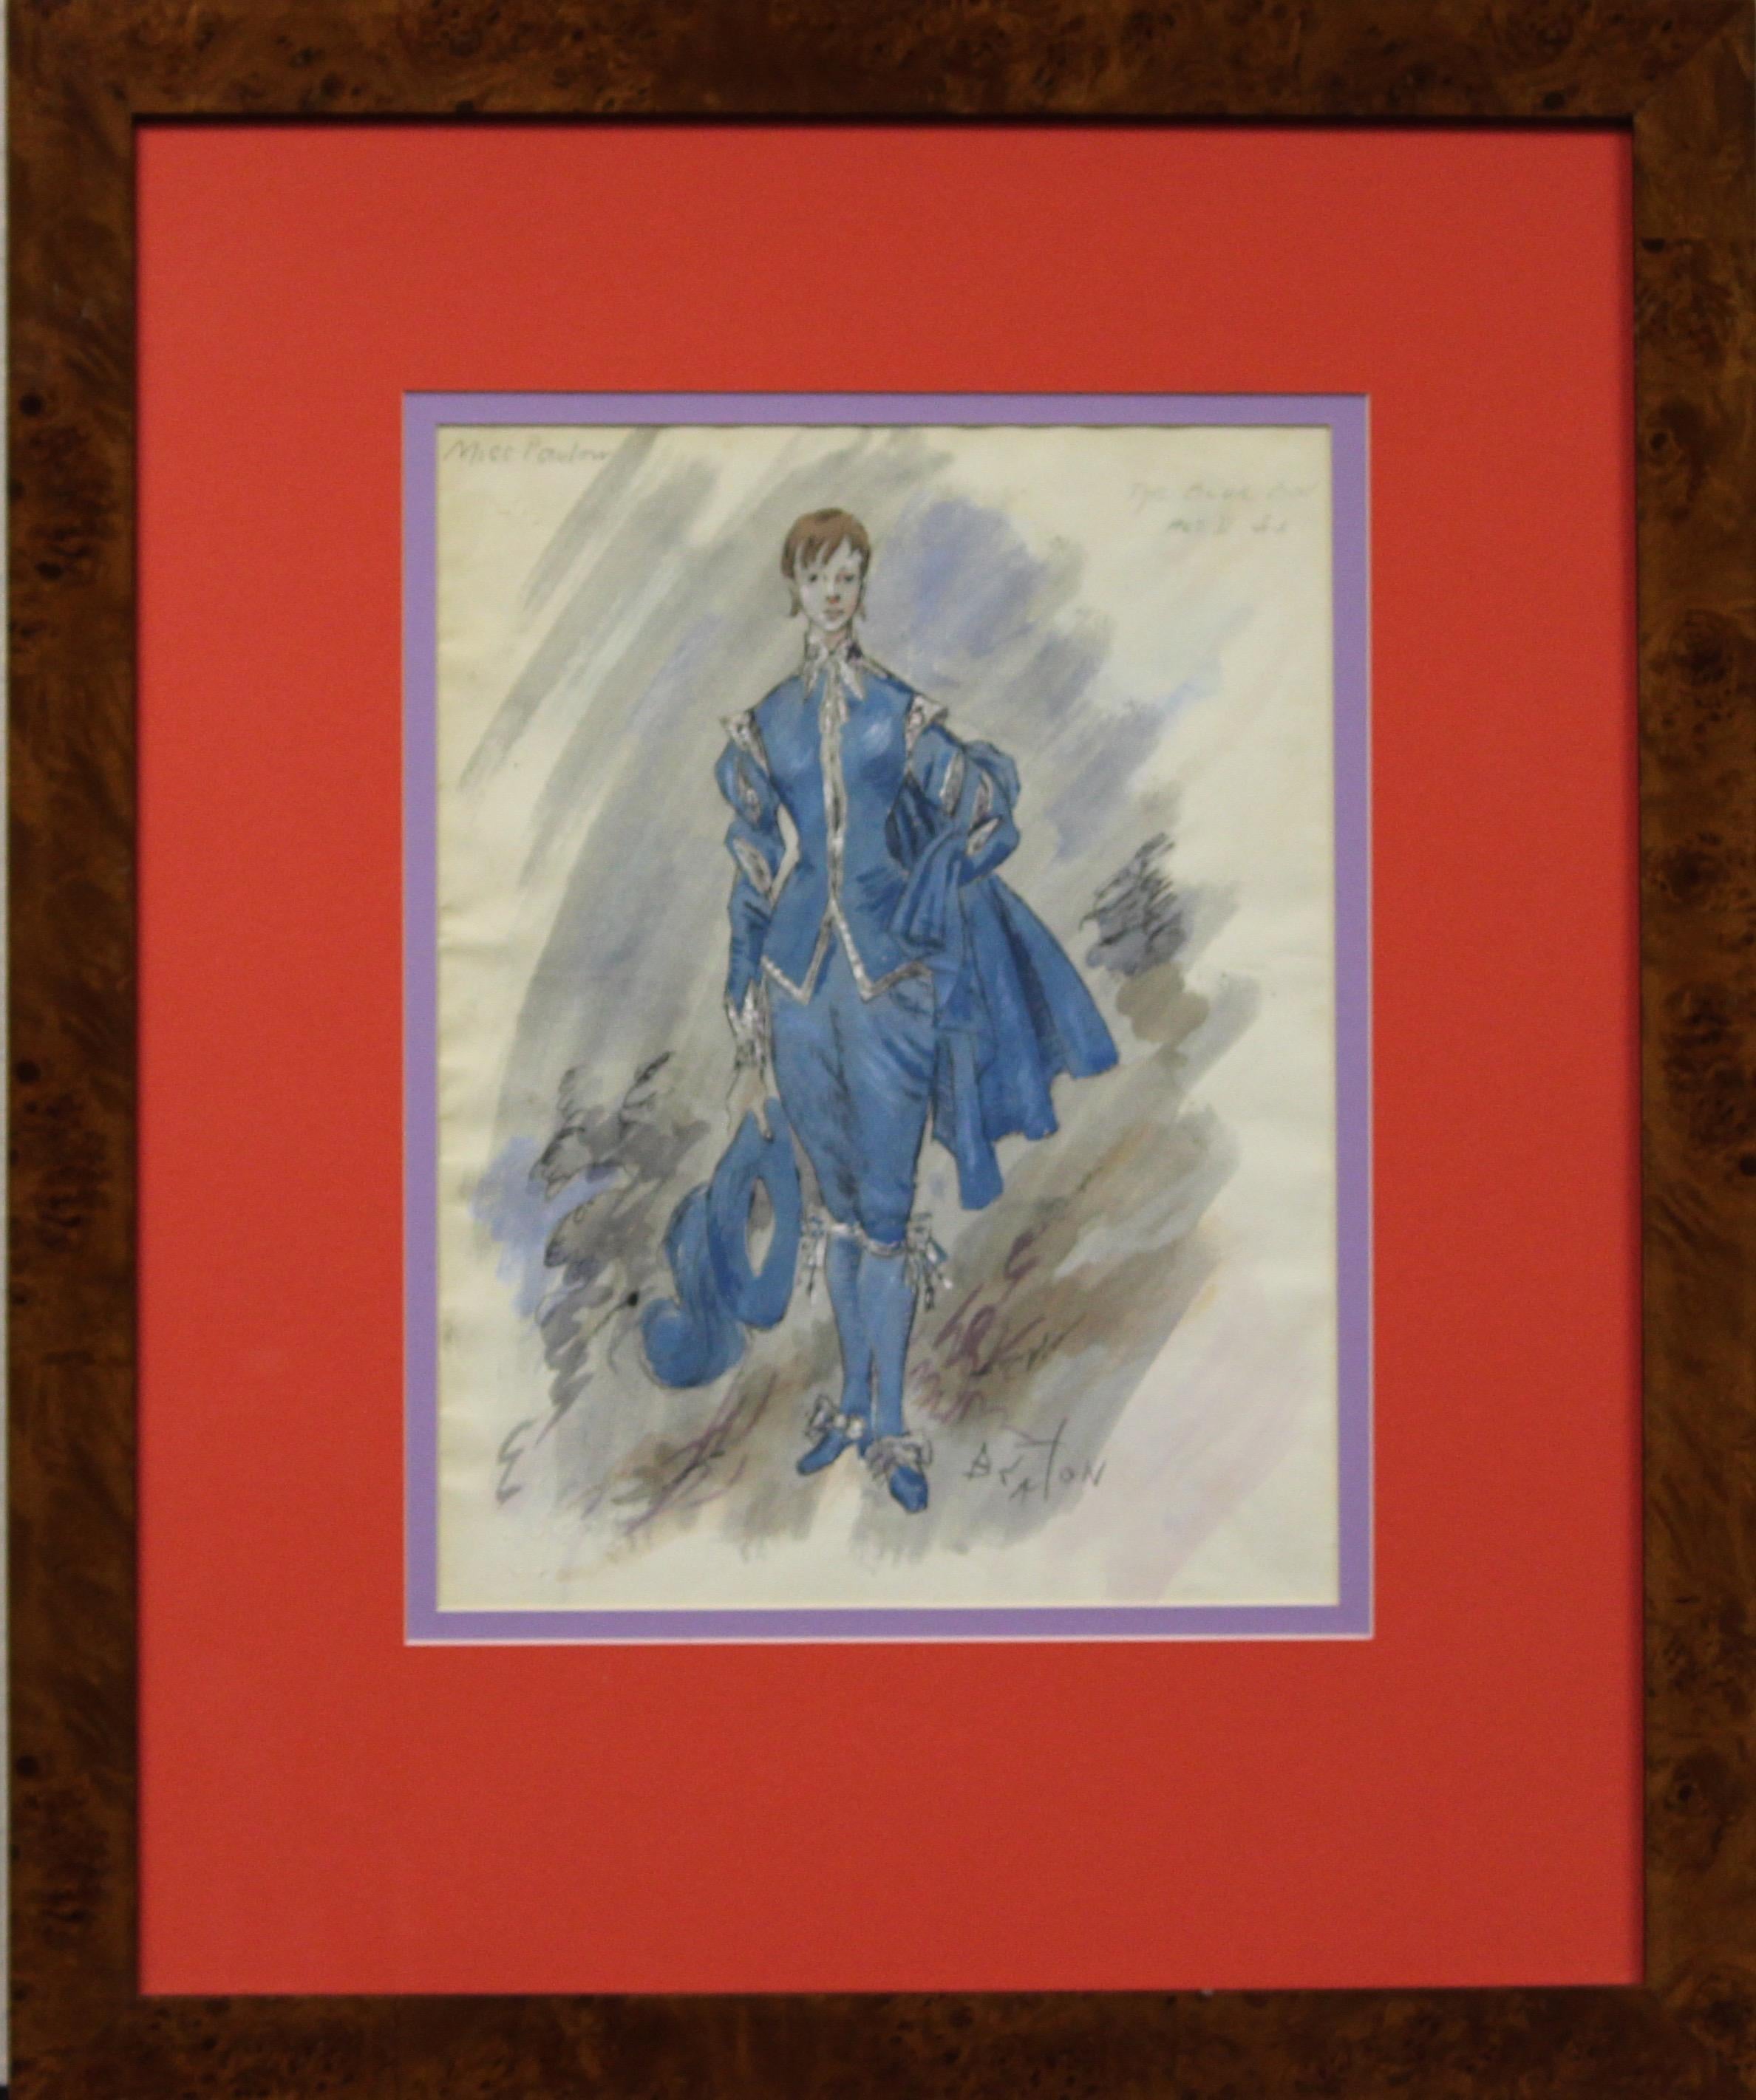 Original Cecil Beaton (1904-1980) um 1950 Aquarell 'The Blue Boy' Miss Paulow (UL) signiert 'Beaton' (LR)

Art Sz: 14 1/2 "H x 11 "W

Rahmengröße: 27 "H x 22 "W